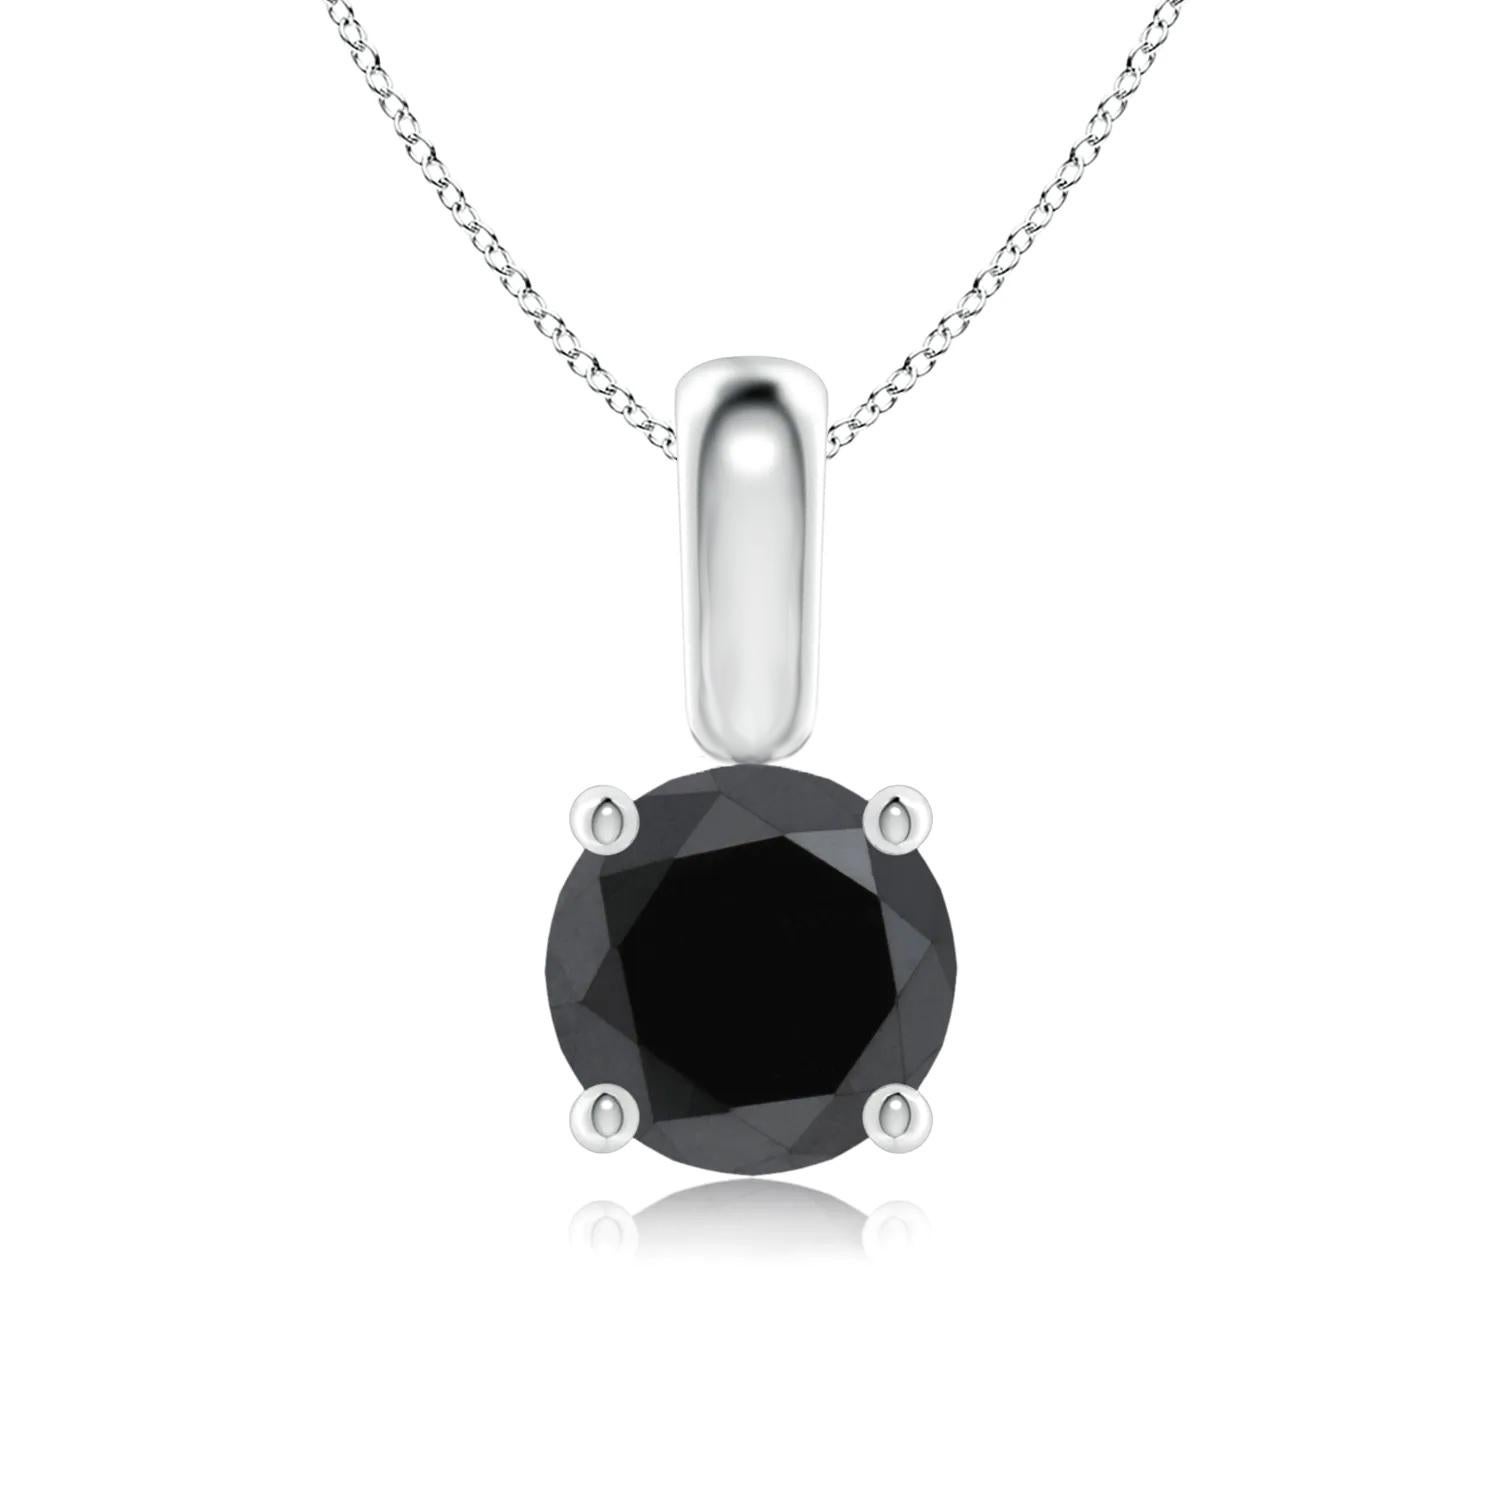 Round Cut 1.25 Carat Round Black Diamond Solitaire Pendant Necklace in 14K White Gold